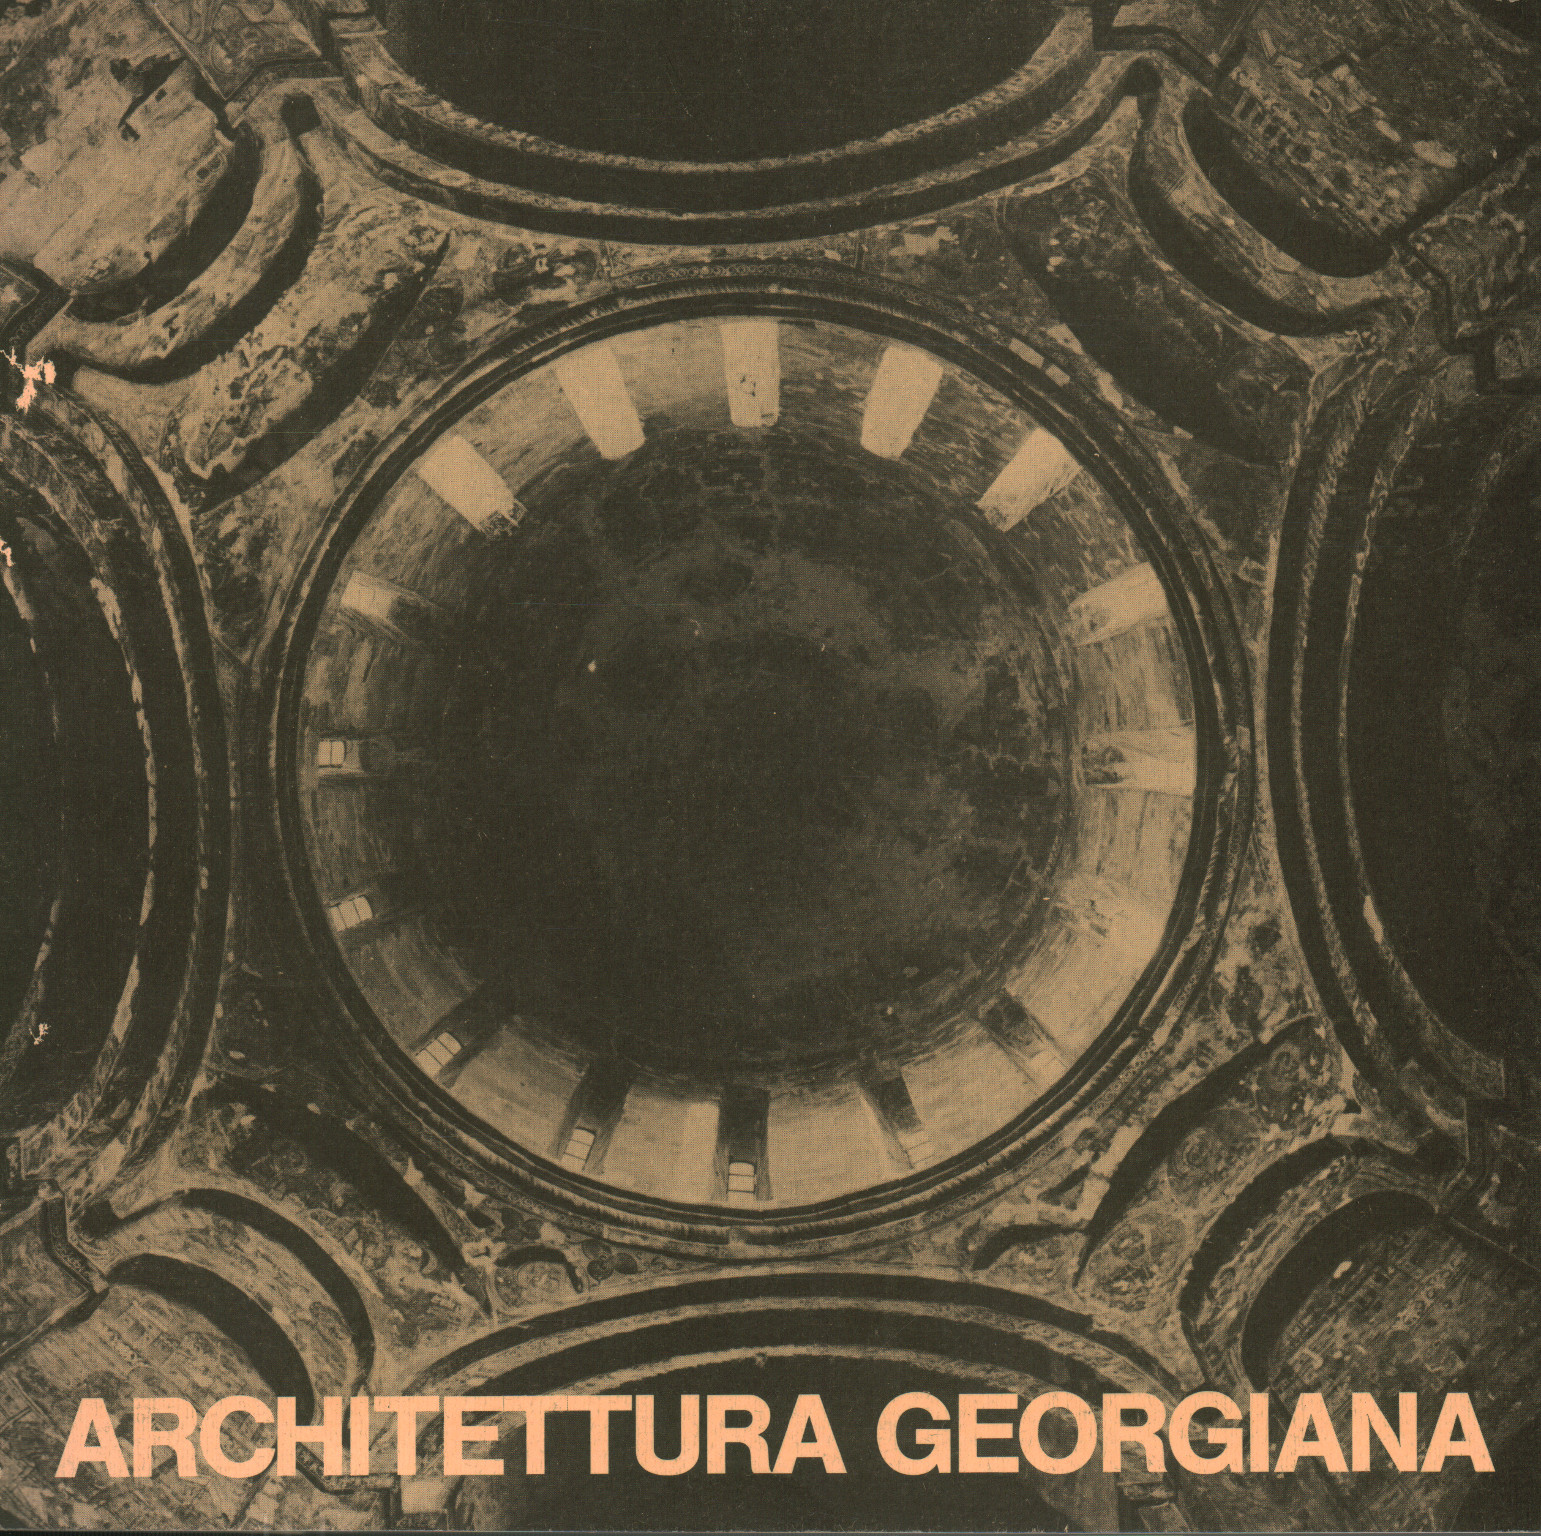 Architettura georgiana, s.a.